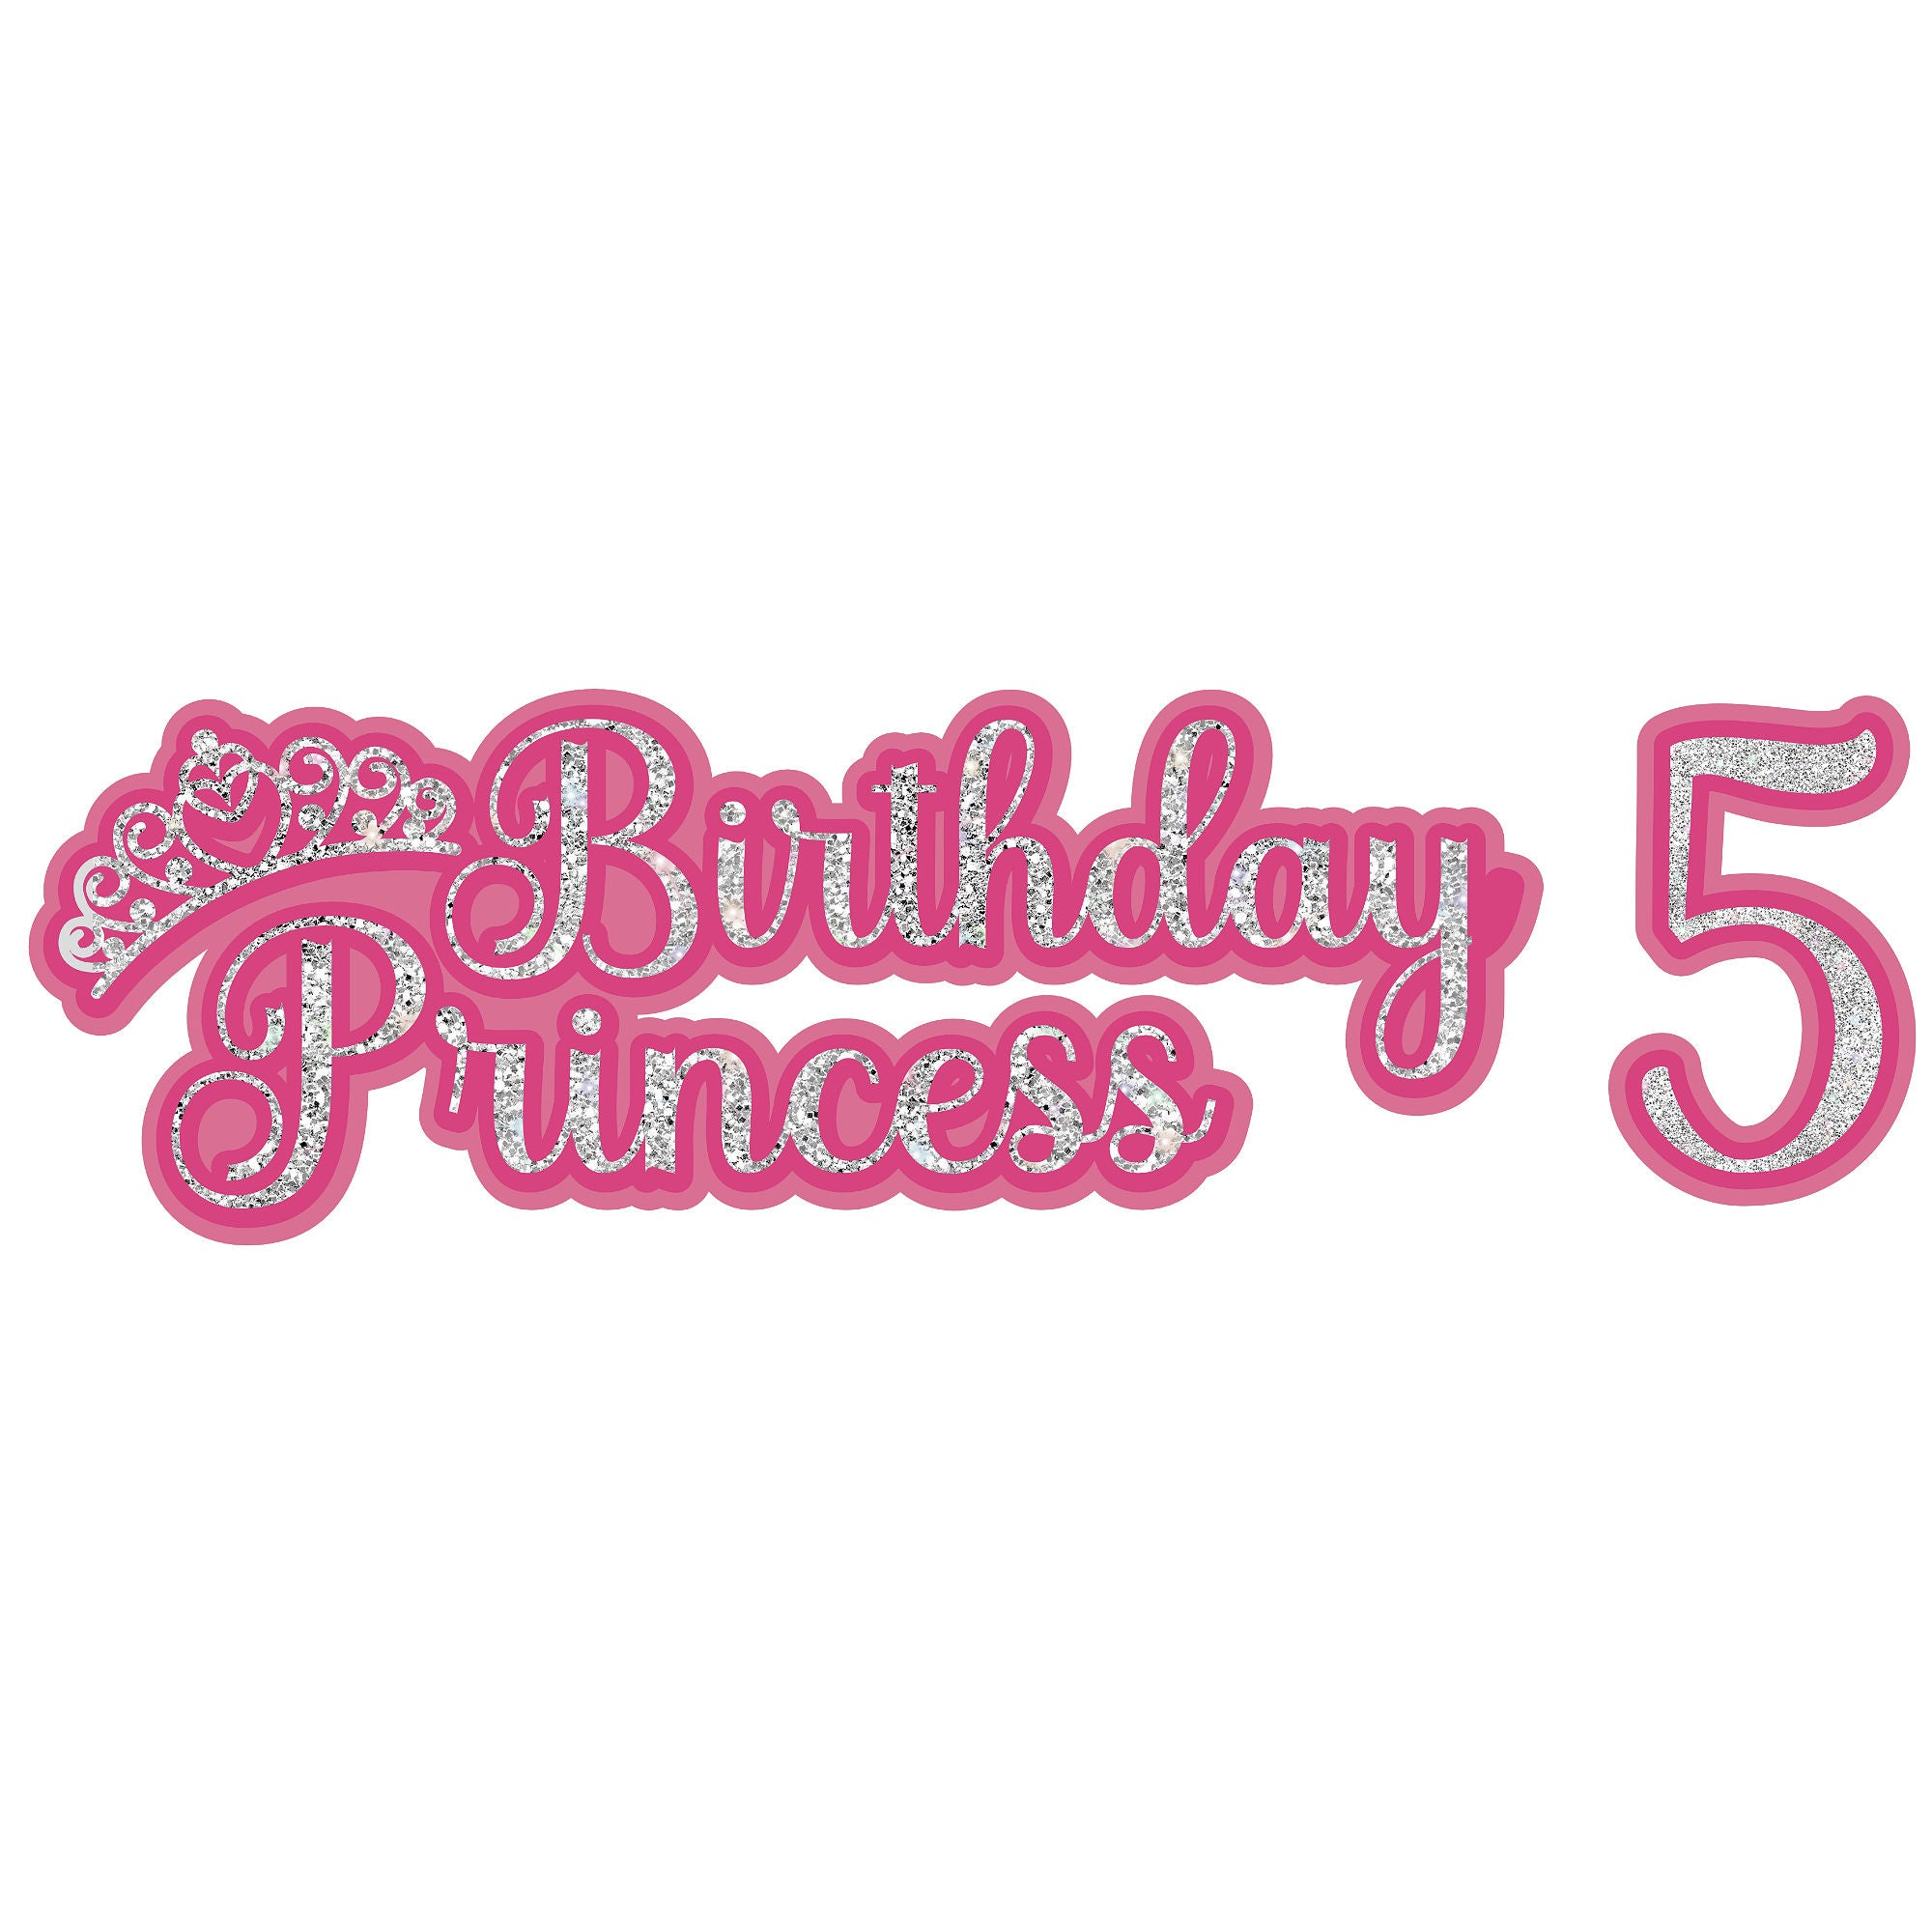 Birthday Princess Title 6.5x2.5 & Age 2x3 **CUSTOM** Fully-Assembled Laser Cut Scrapbook Embellishment by SSC Laser Designs